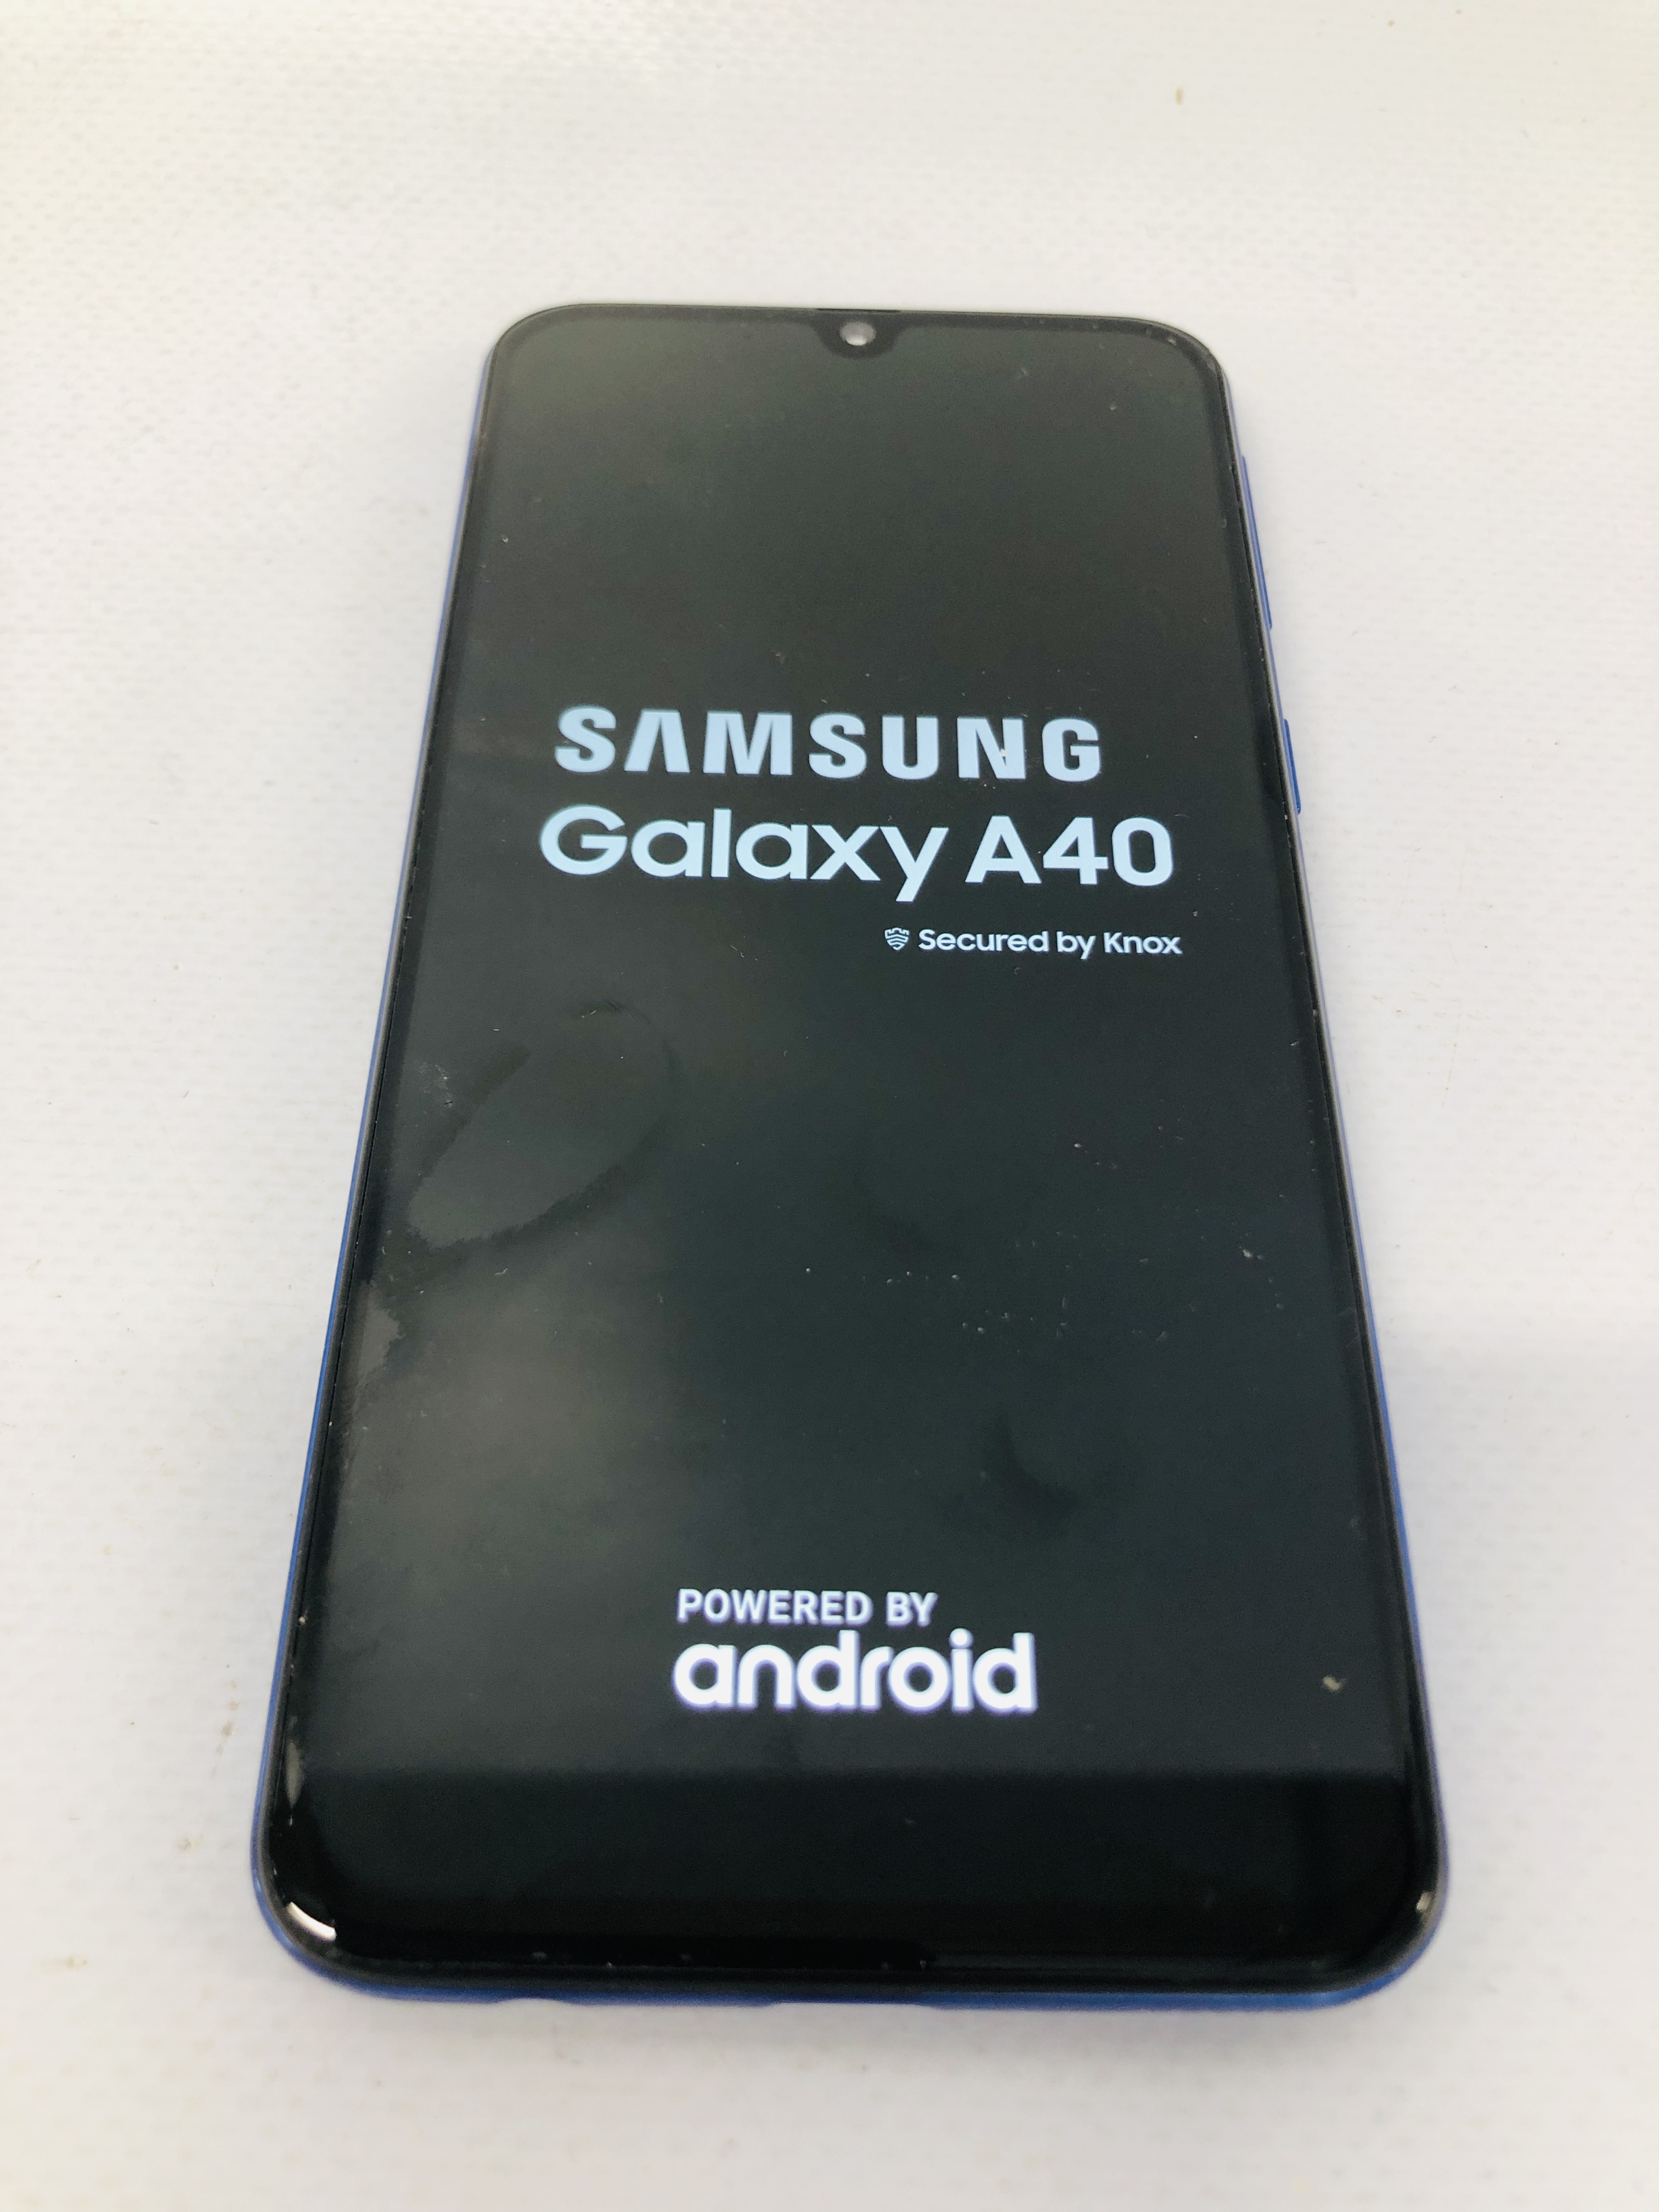 A SAMSUNG GALAXY A40 SMARTPHONE - SOLD AS SEEN - NO GUARANTEE OF CONNECTIVITY